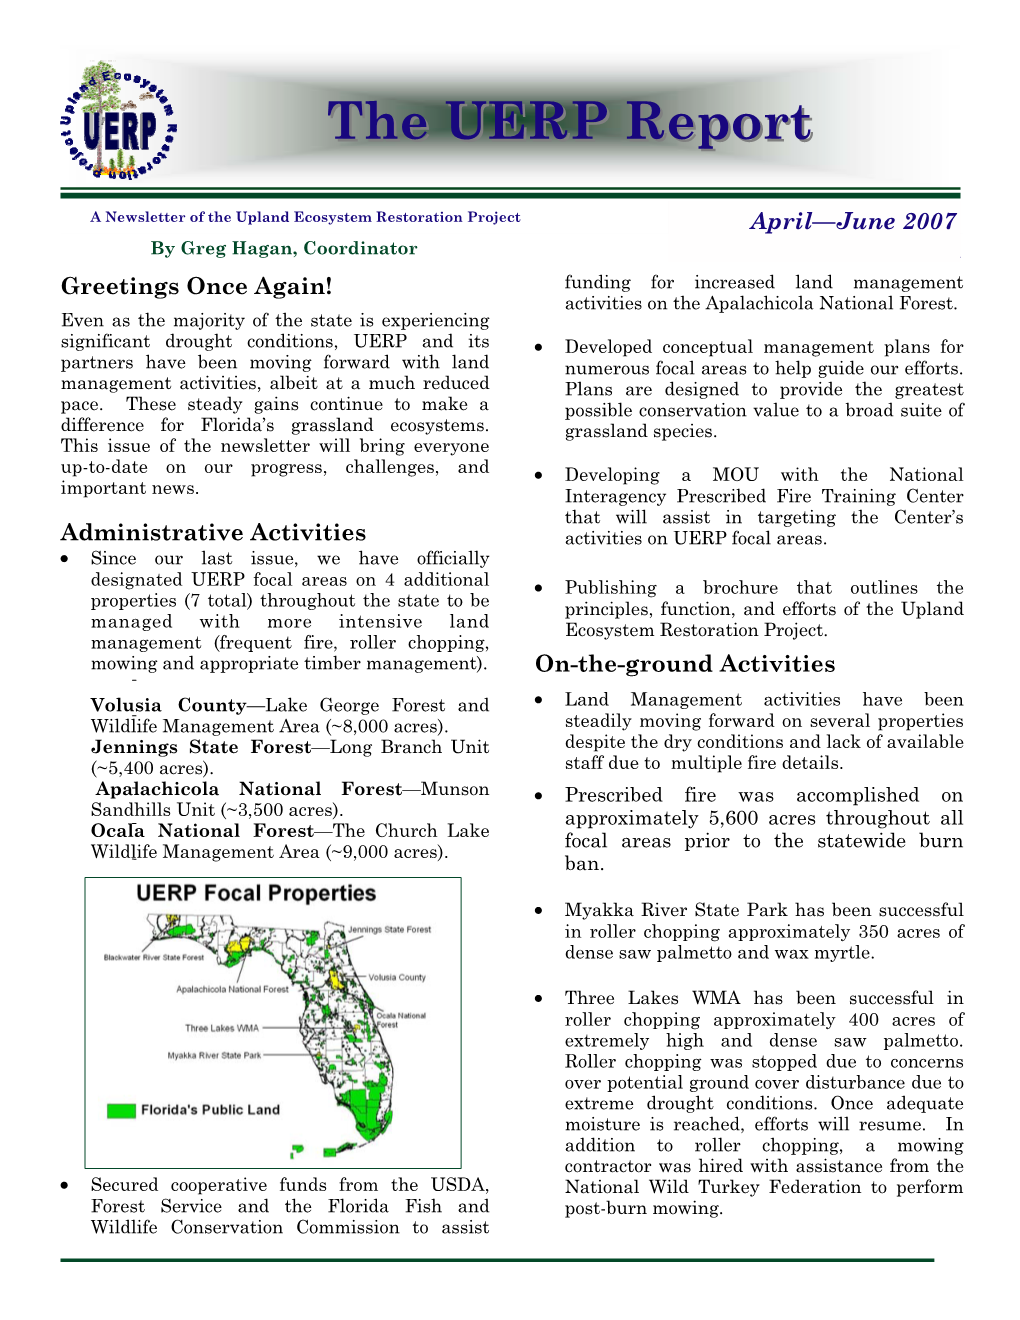 The UERP Report: April-June 2007